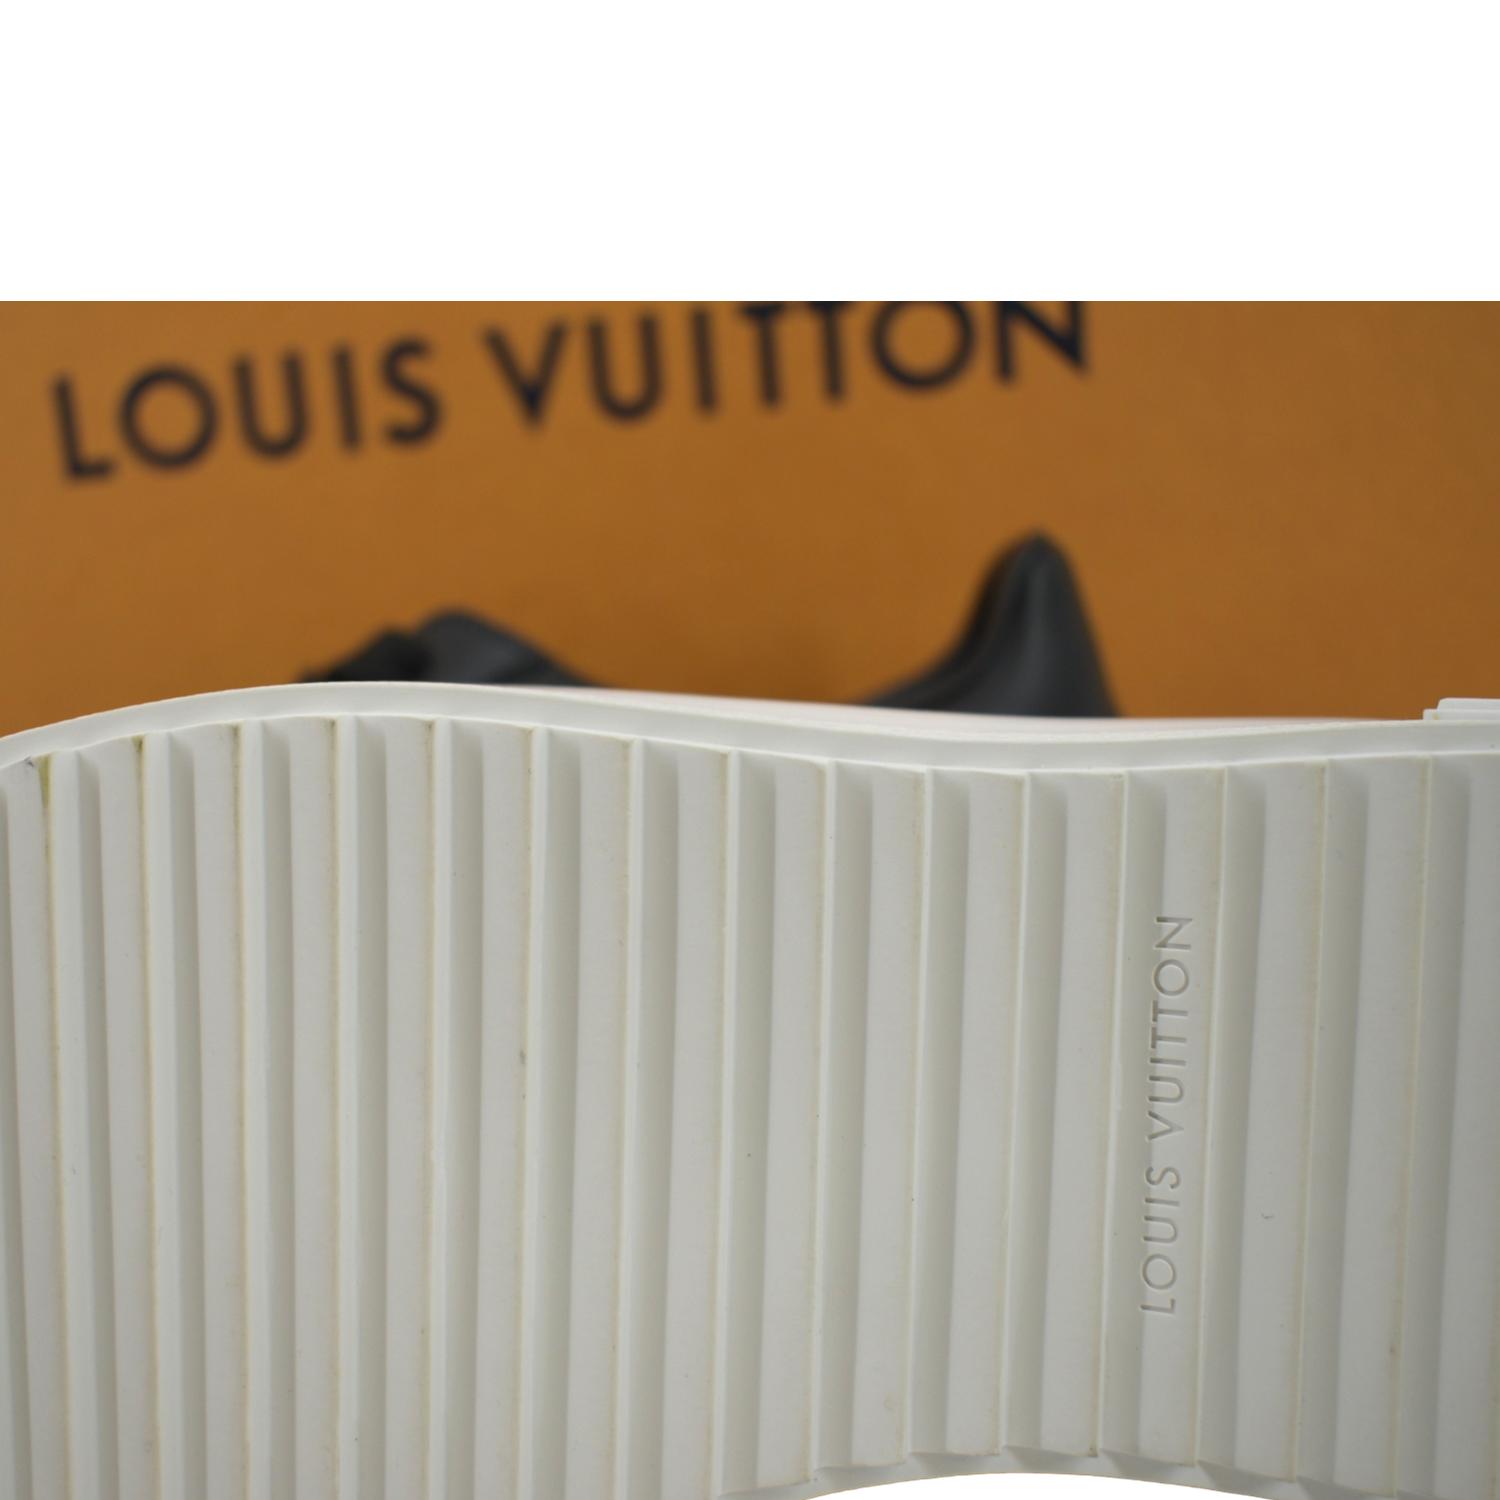 Louis Vuitton Monogram Time Out Sneaker, Brown, 37